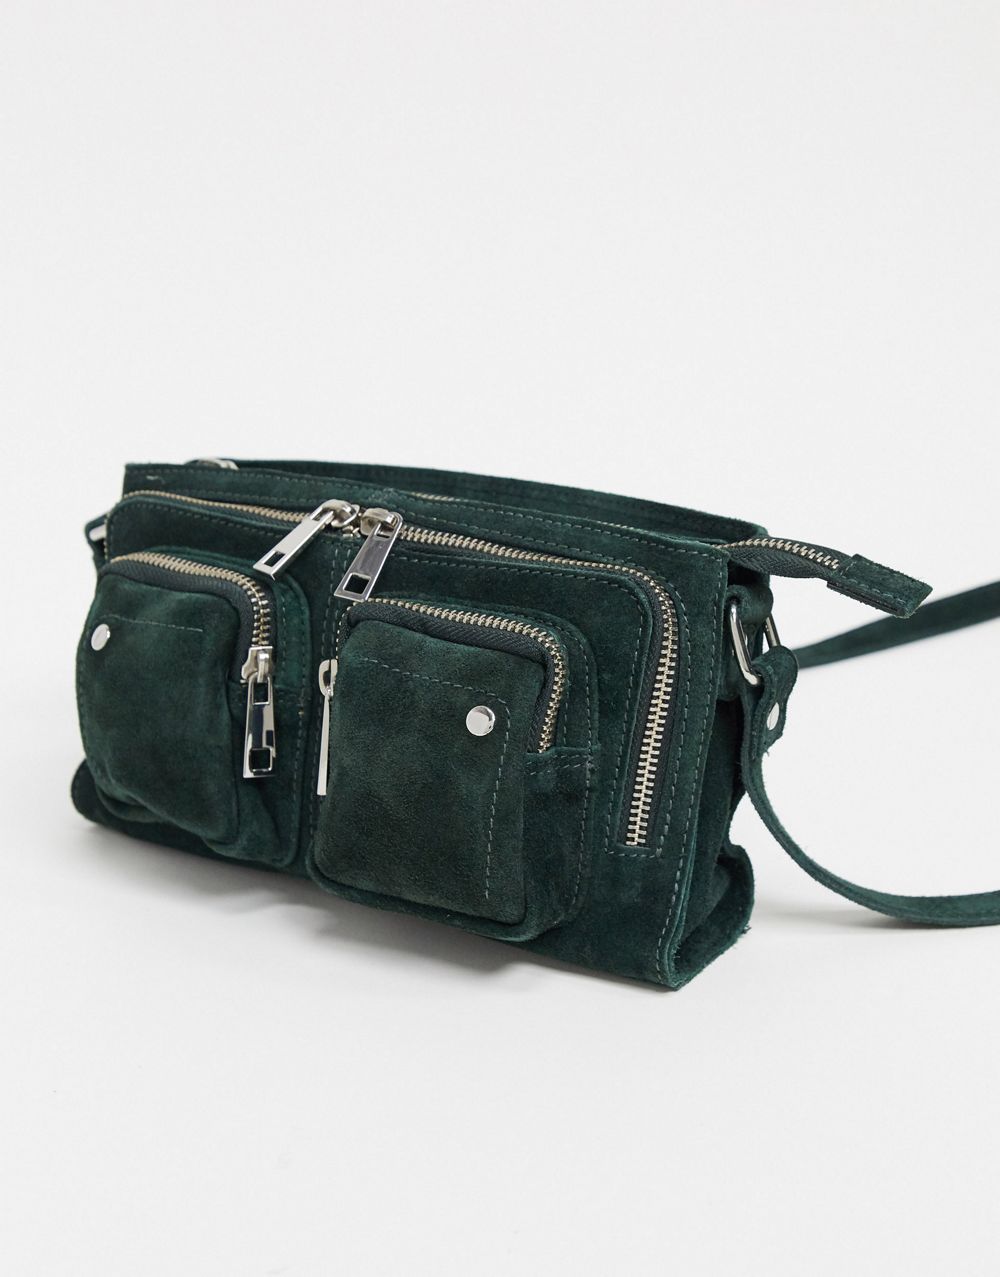 Nunoo Green Stine Suede Bag with Zipper Pockets